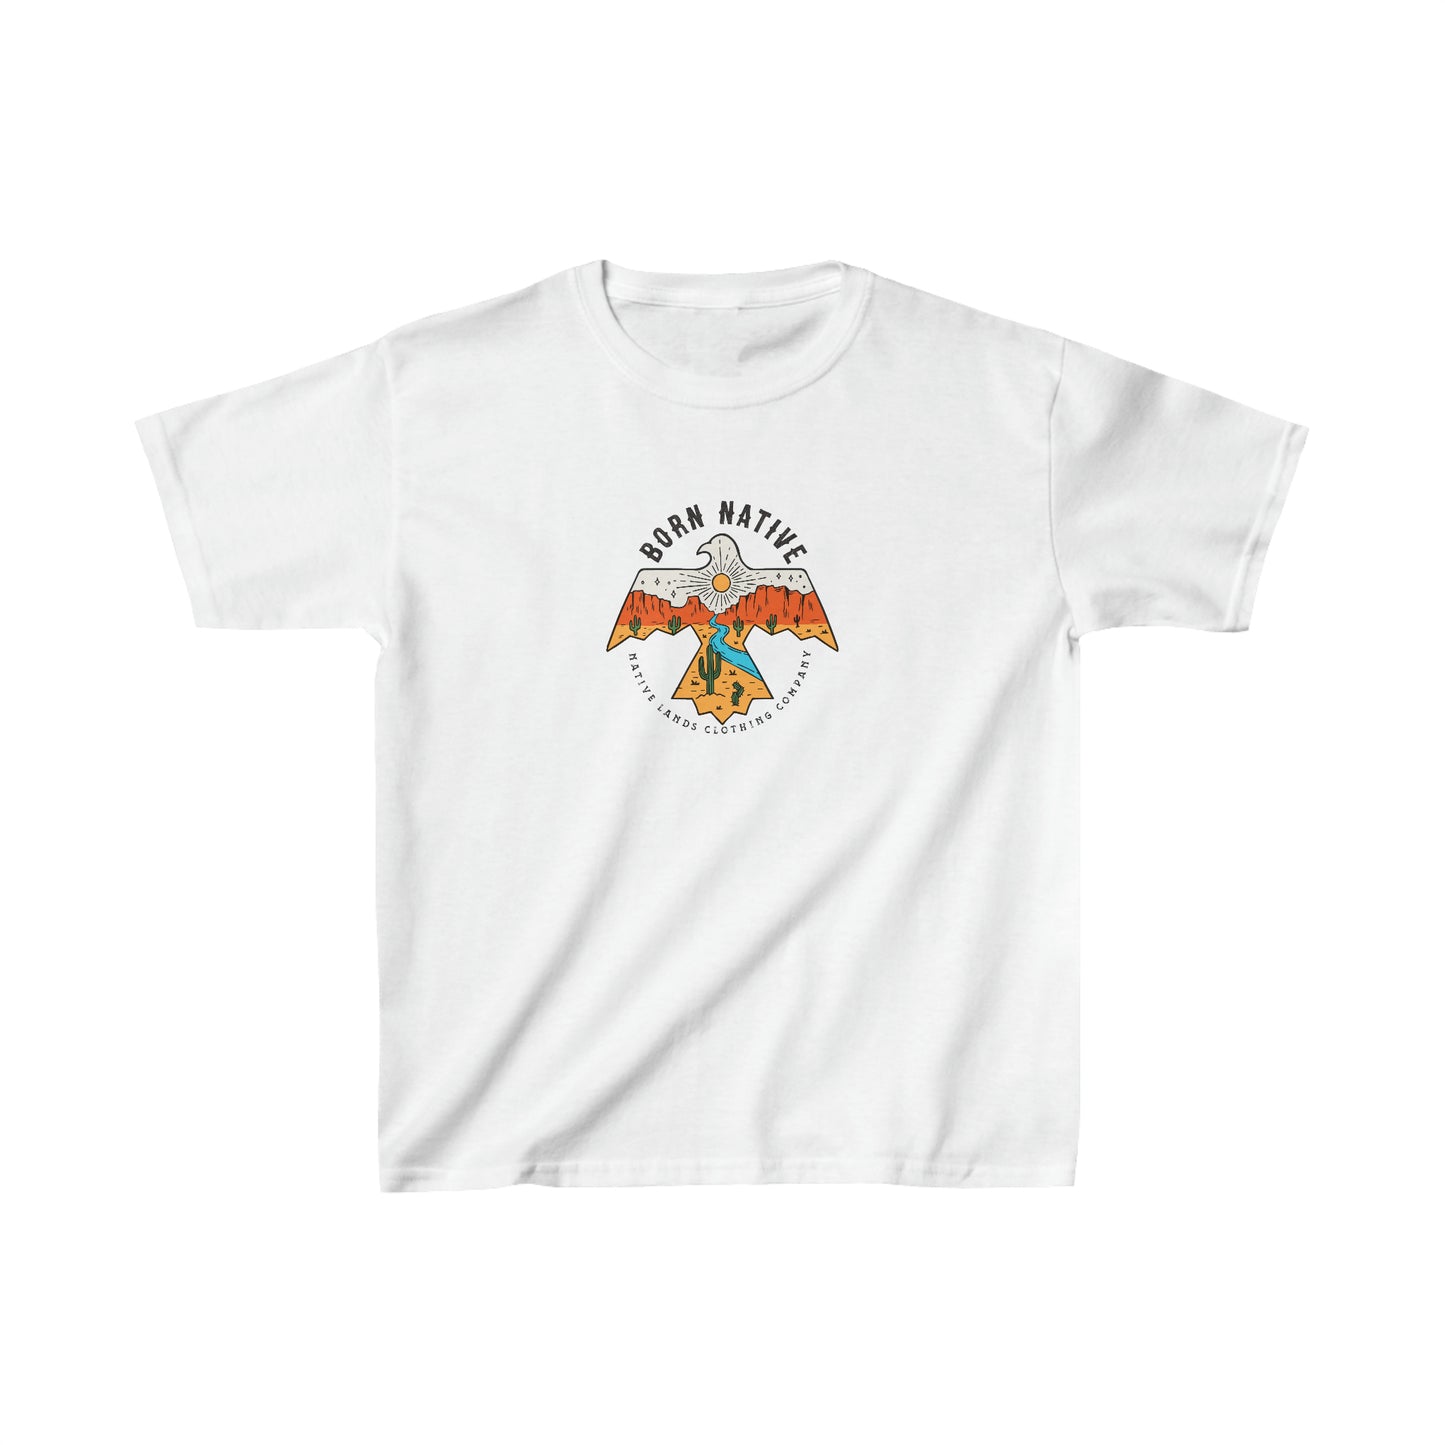 Youth Thunderbird Shirt Cotton Native American